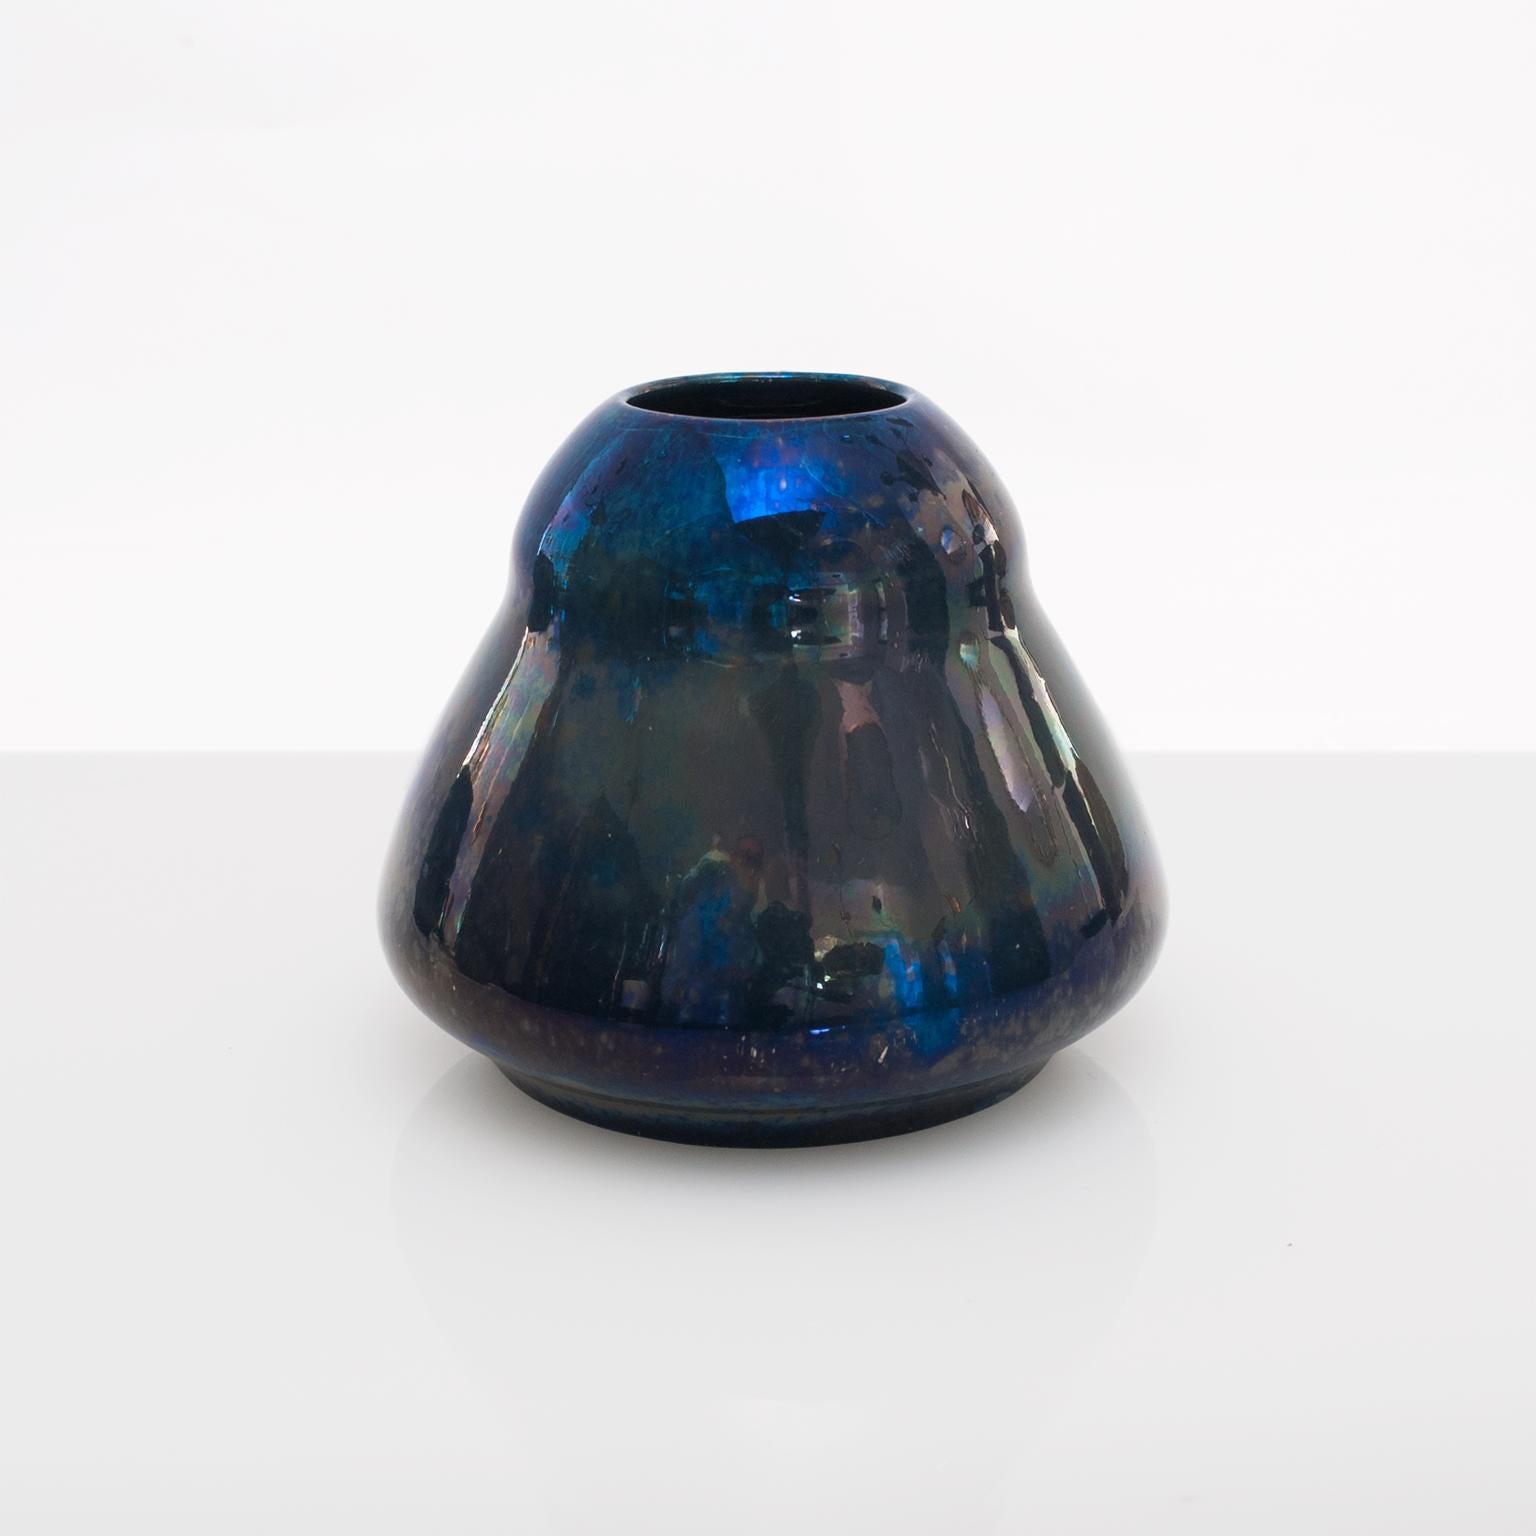 Swedish art deco ceramic vase in deep blue luster glaze. Made by Höganäs Keramik, circa 1920.
Diameter: 4.5